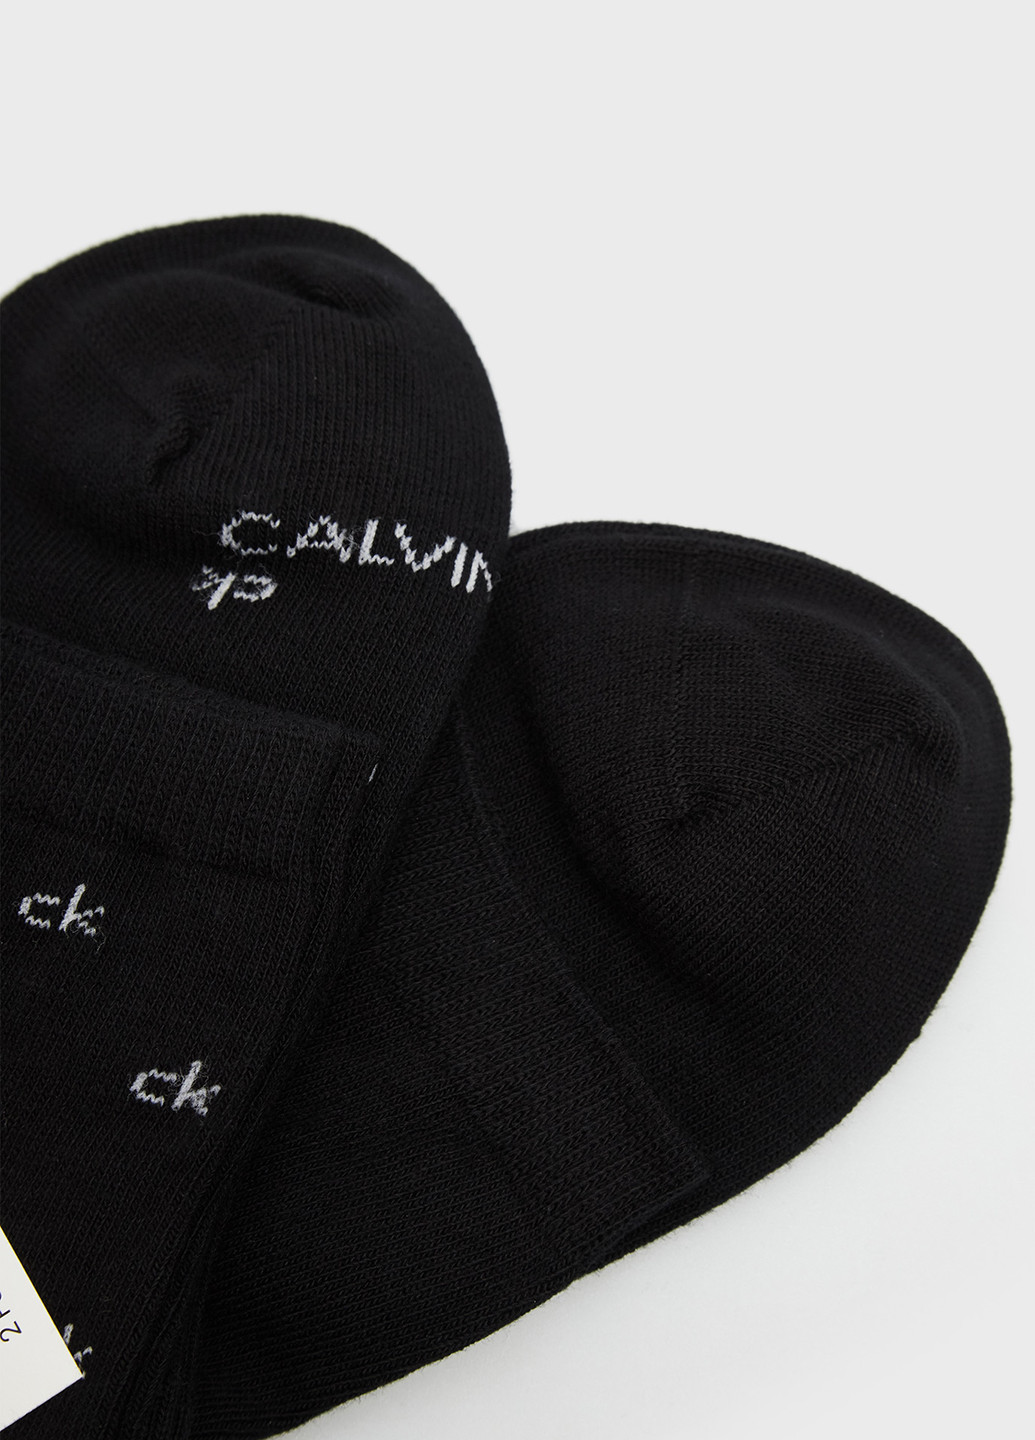 Шкарпетки Calvin Klein (203824827)